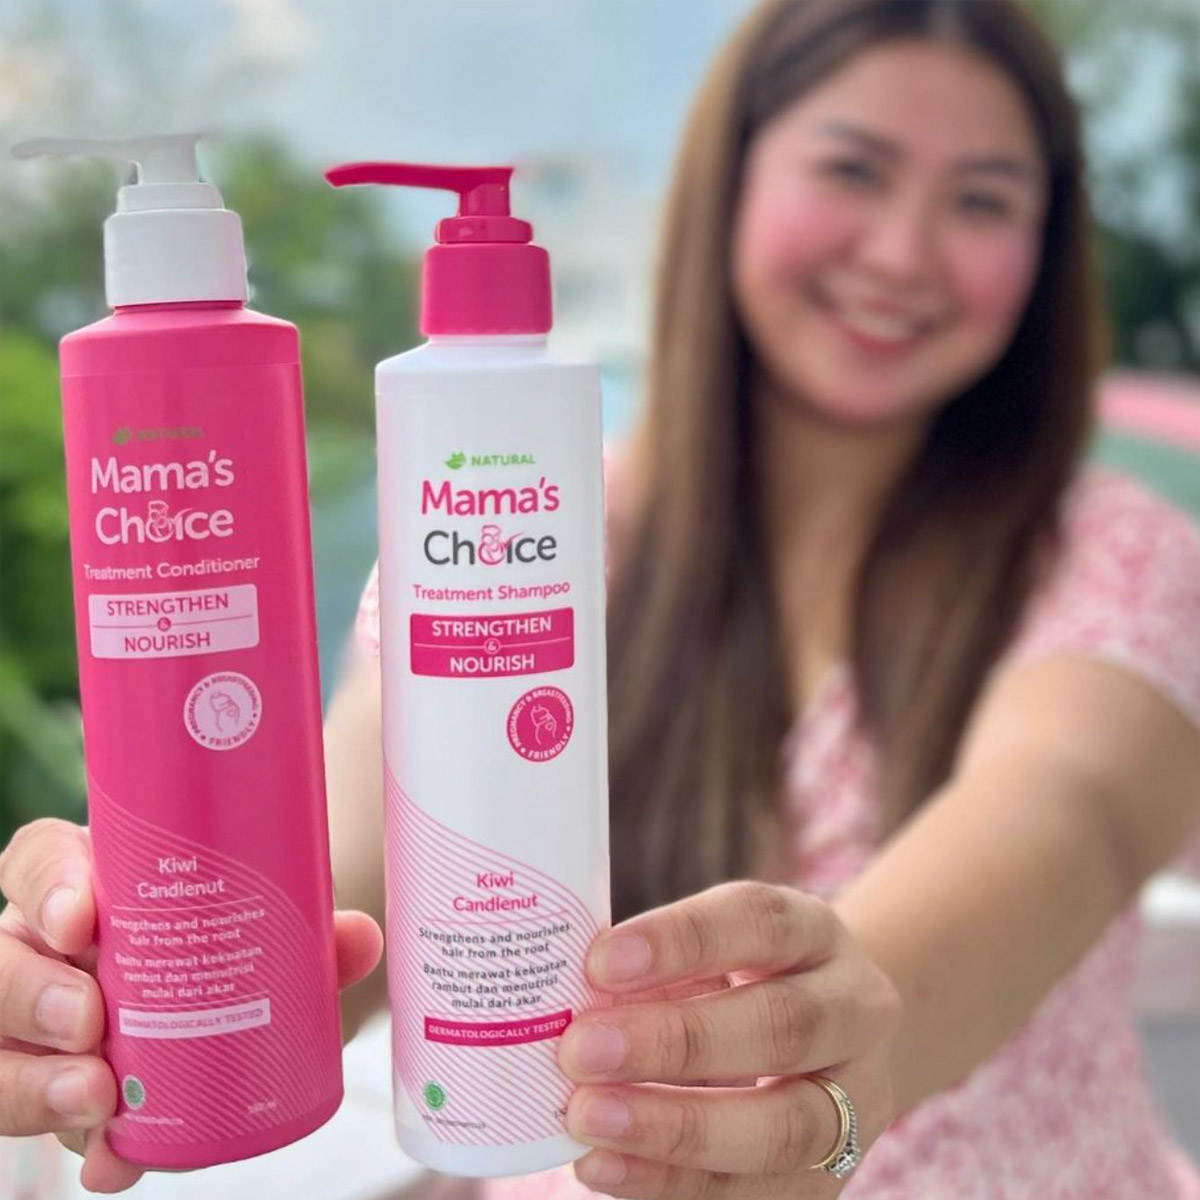 Mama's-Choice-treatment-shampoo-and-conditioner